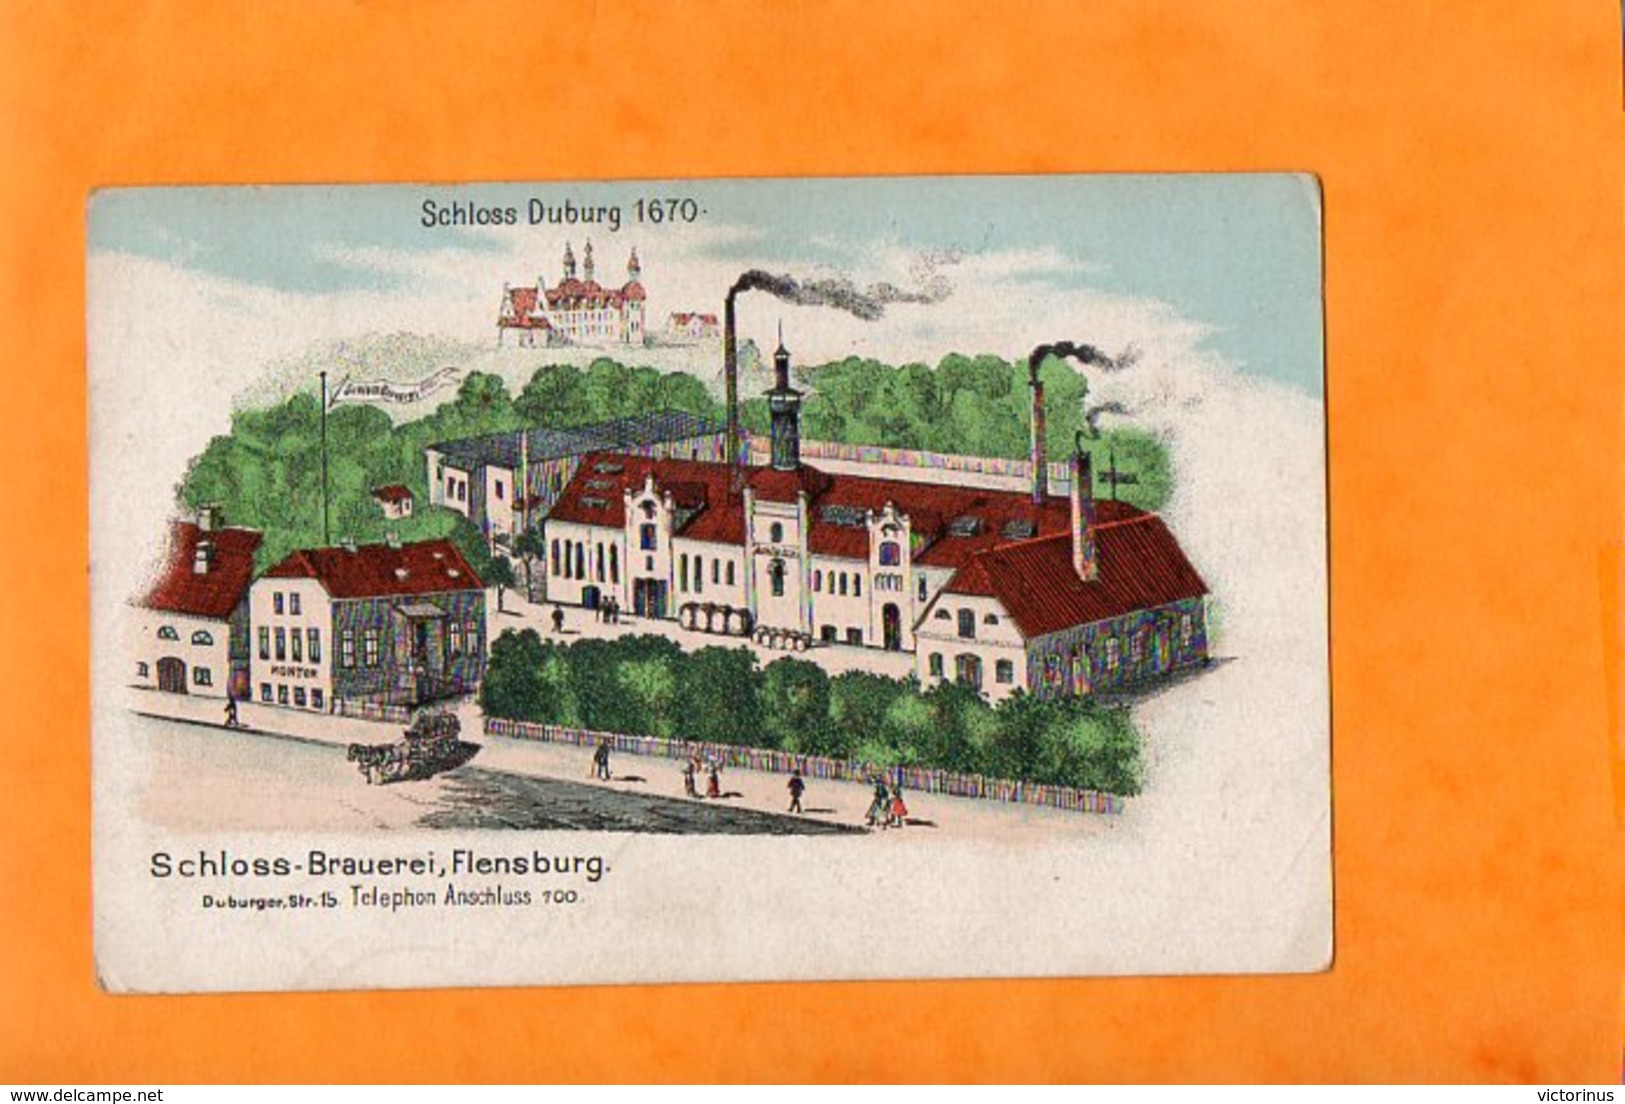 FLENSBURG  -  SCHLOSS-BRAUEREI  -  FLENSBURG  -  SCHLOSS DUBURG 1670 - Flensburg